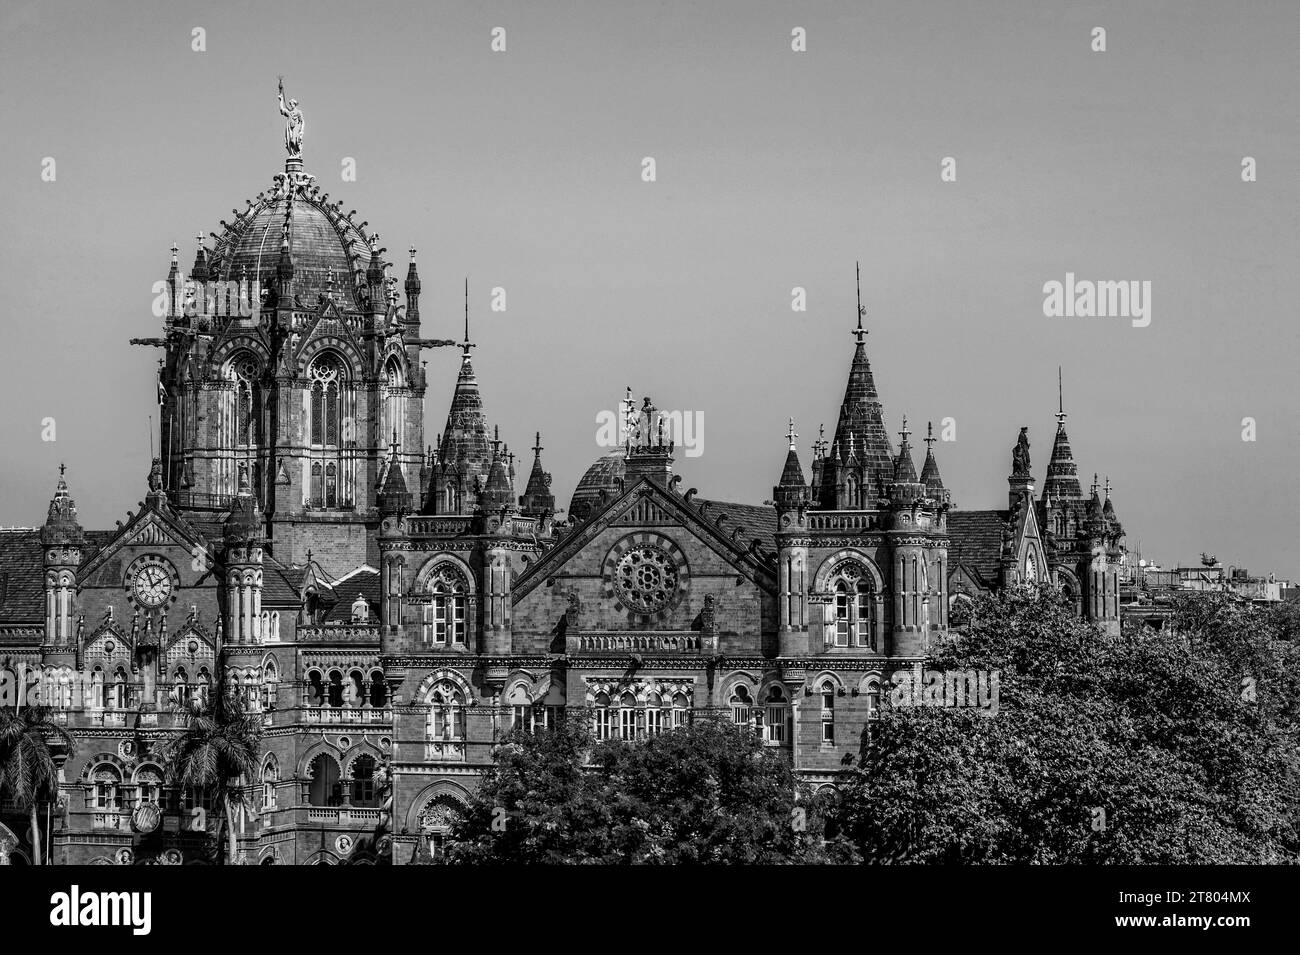 11 17 2012 Vintage Gothik Architecture Chhatrapati Shivaji Maharaj Terminus Railway Station A UNESCO sites du patrimoine mondial Mumbai Maharashtra Inde. Banque D'Images